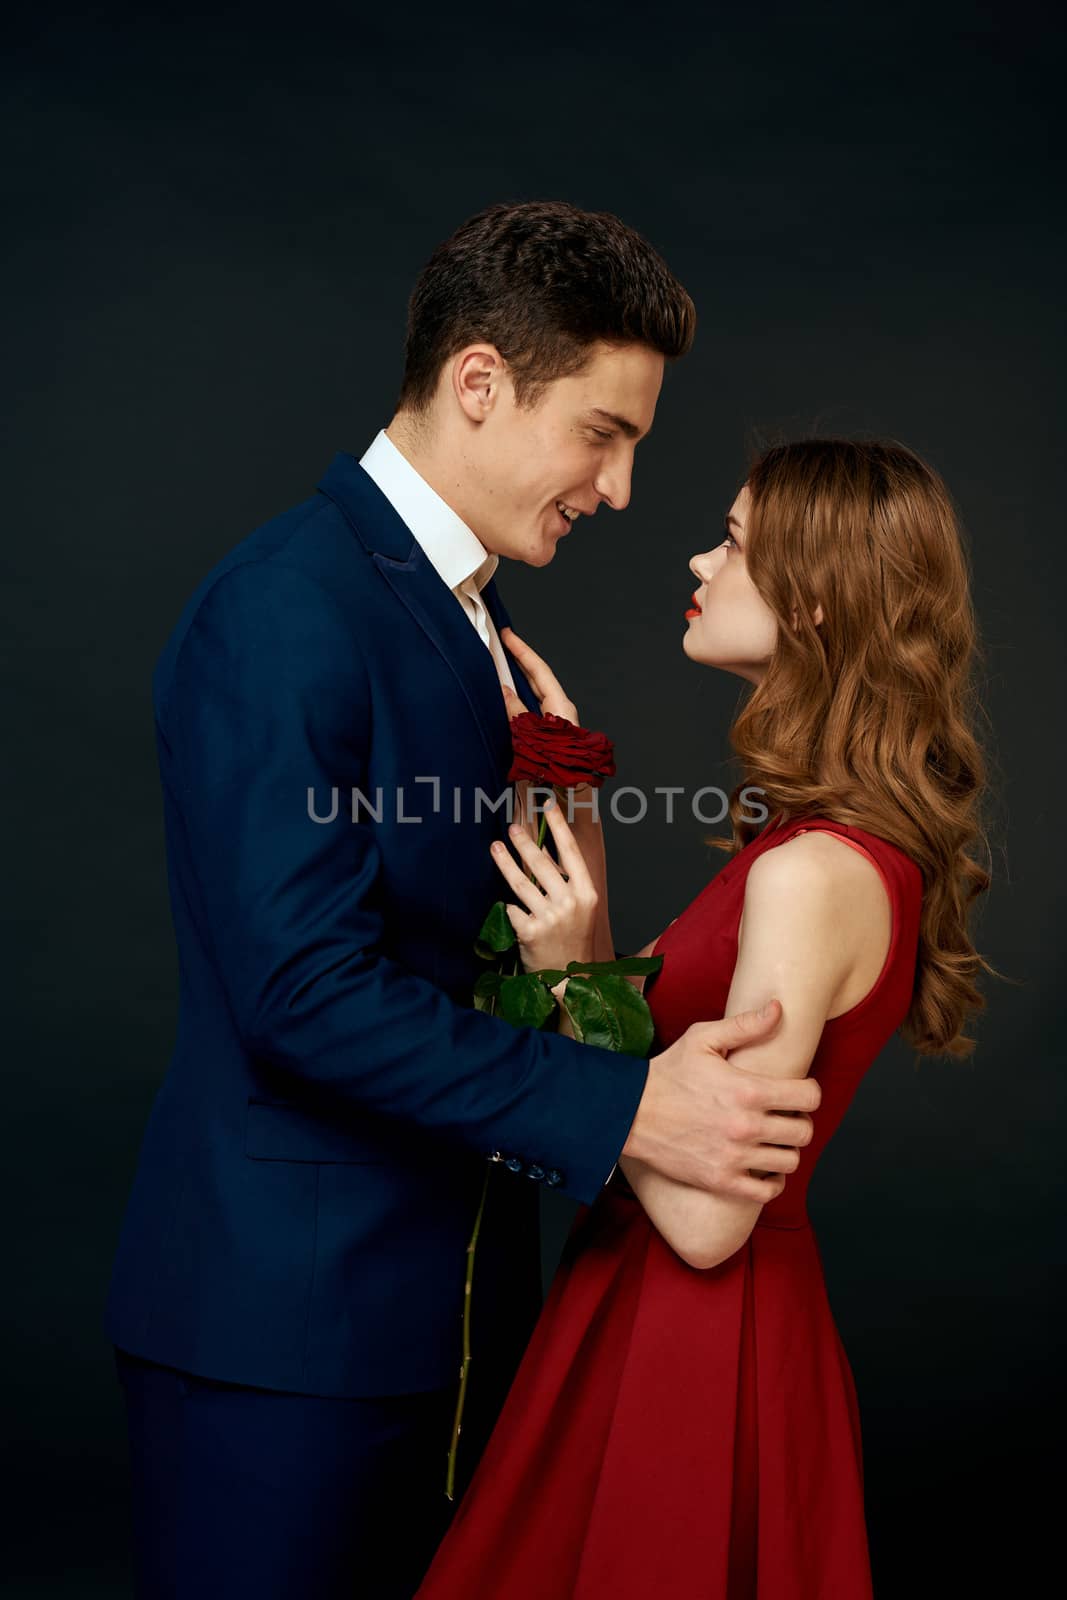 Beautiful couple charm hug lifestyle relationship rose luxury dark background by SHOTPRIME